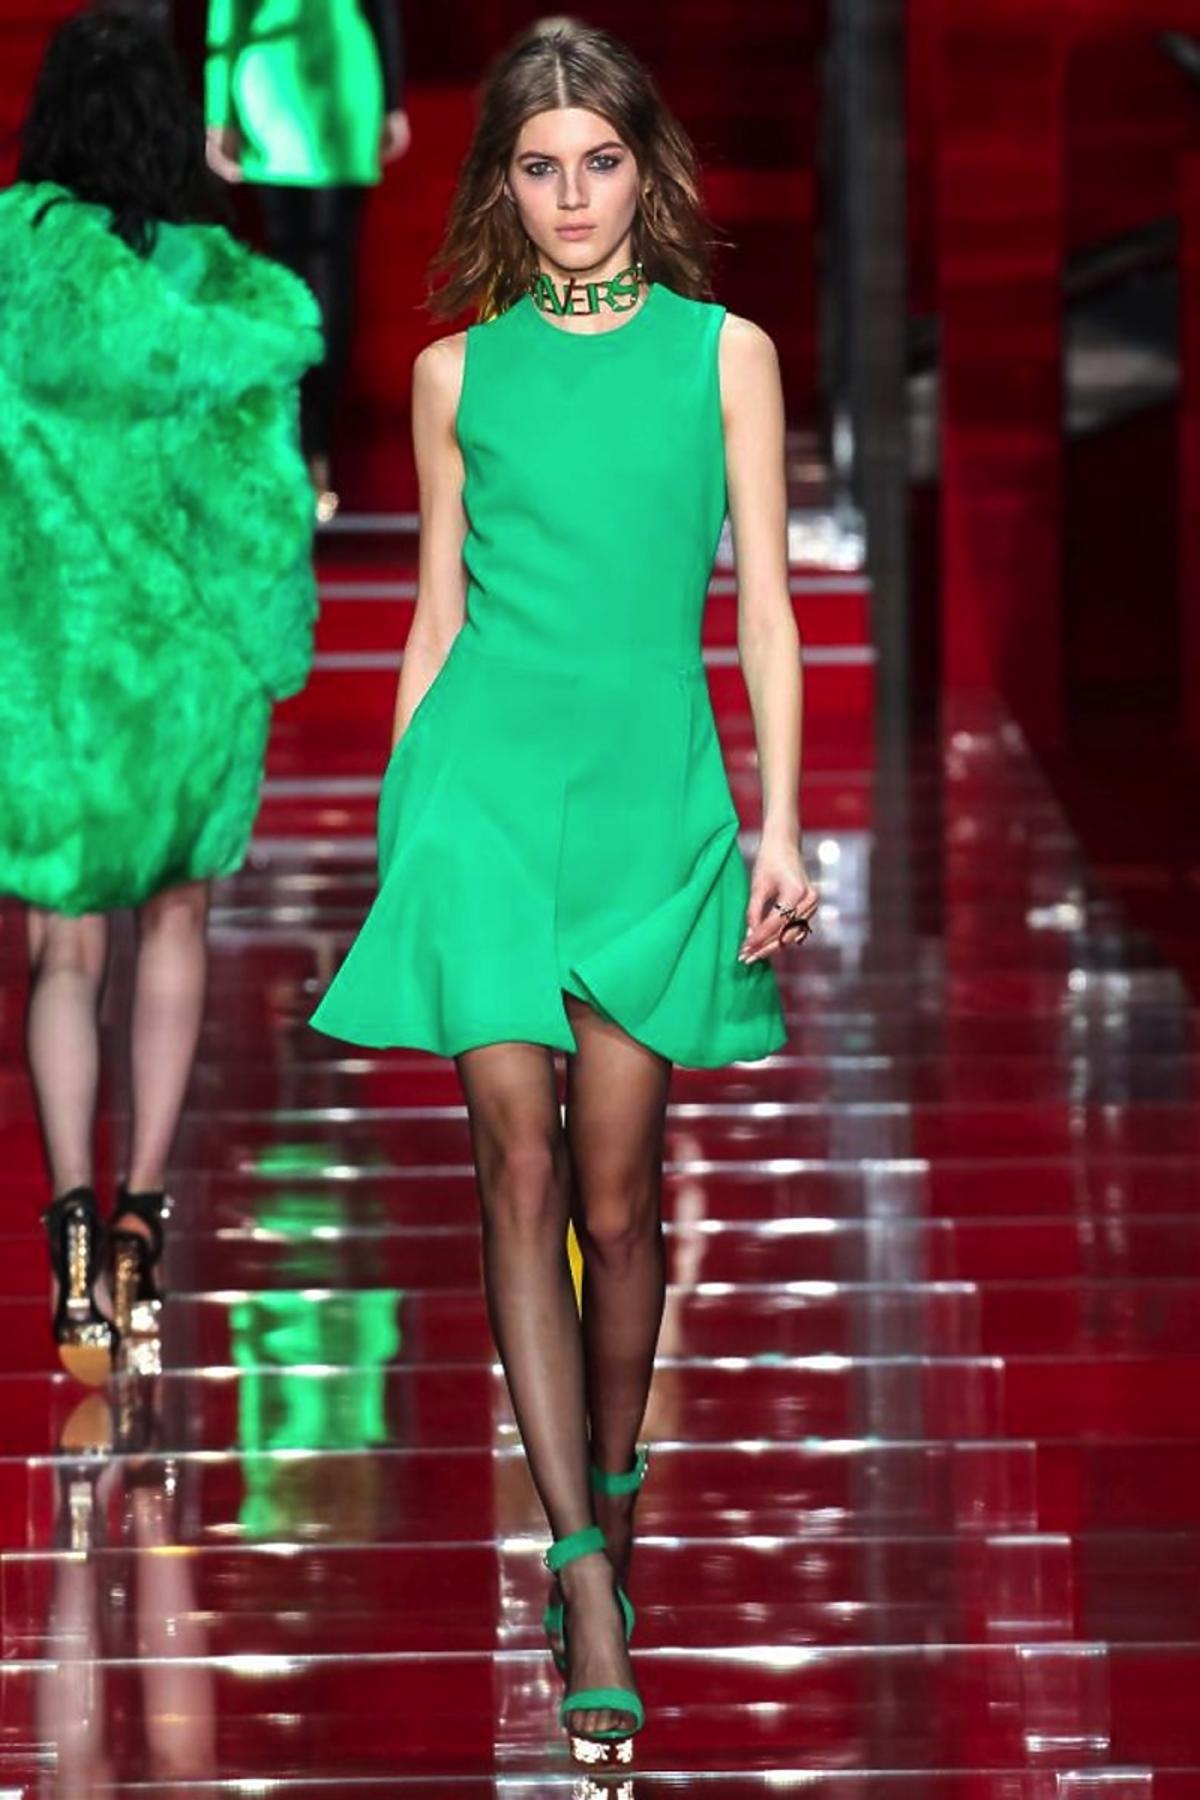 Zielona sukienka na pokazie Versace